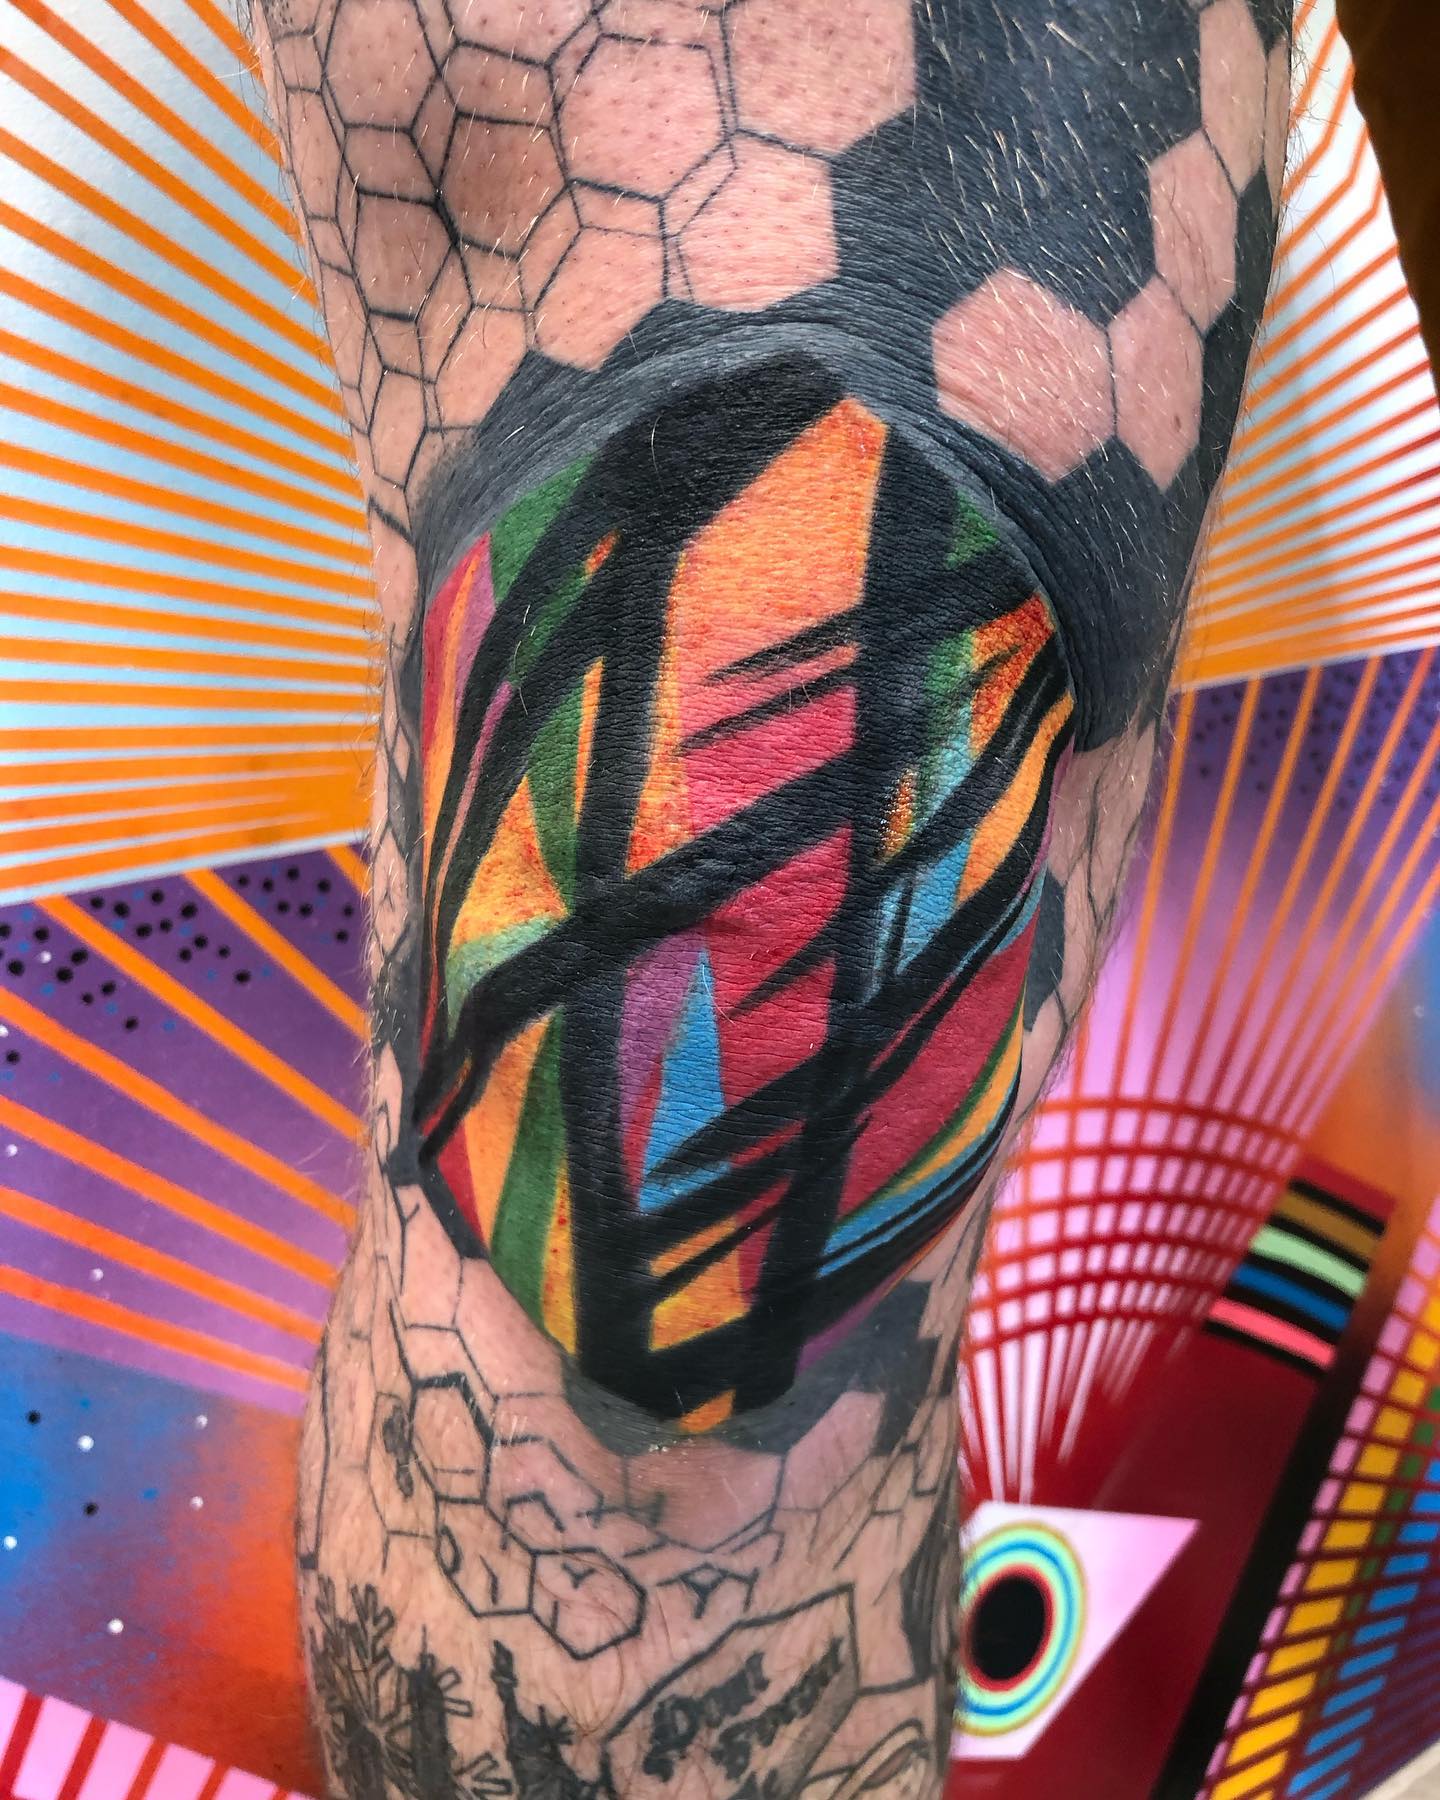 Tatuaje raro y colorido encima de la rodilla